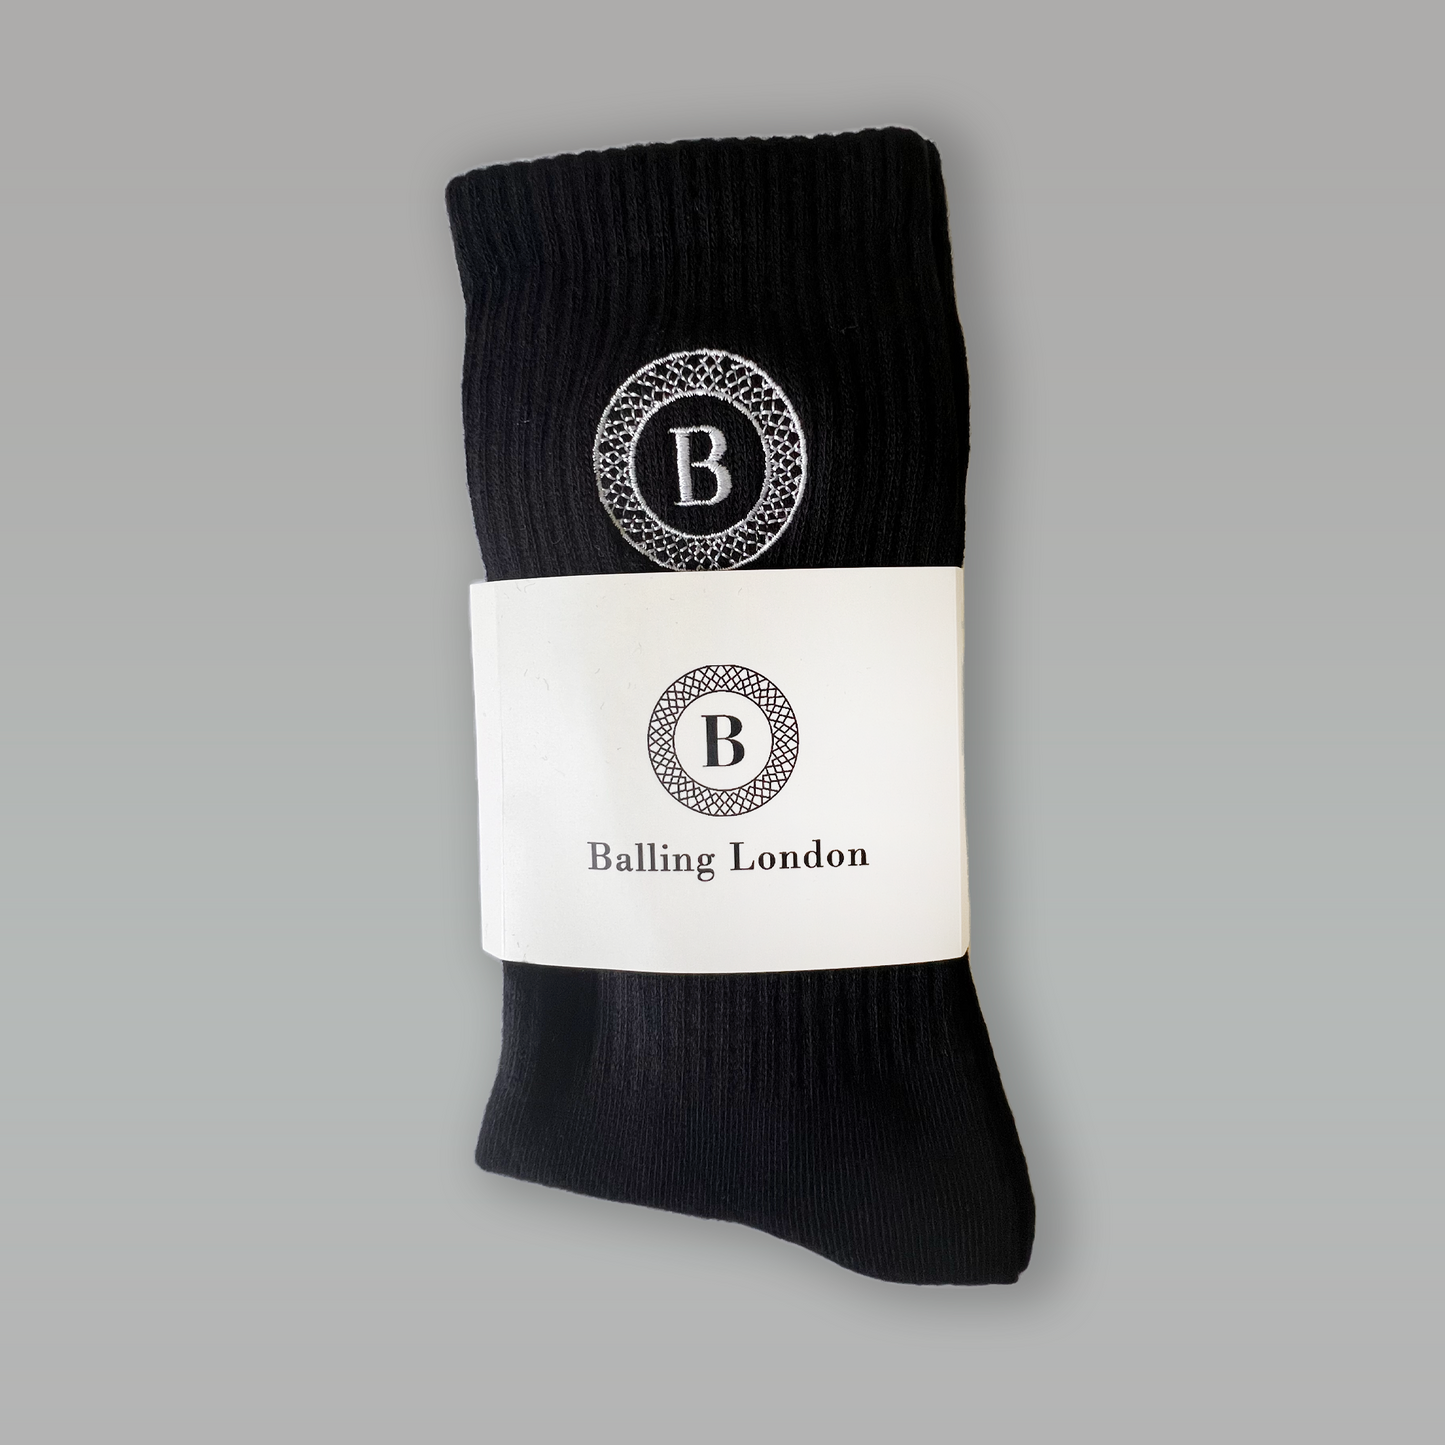 Balling London sport Socks anti slip stripe high quality crew grip